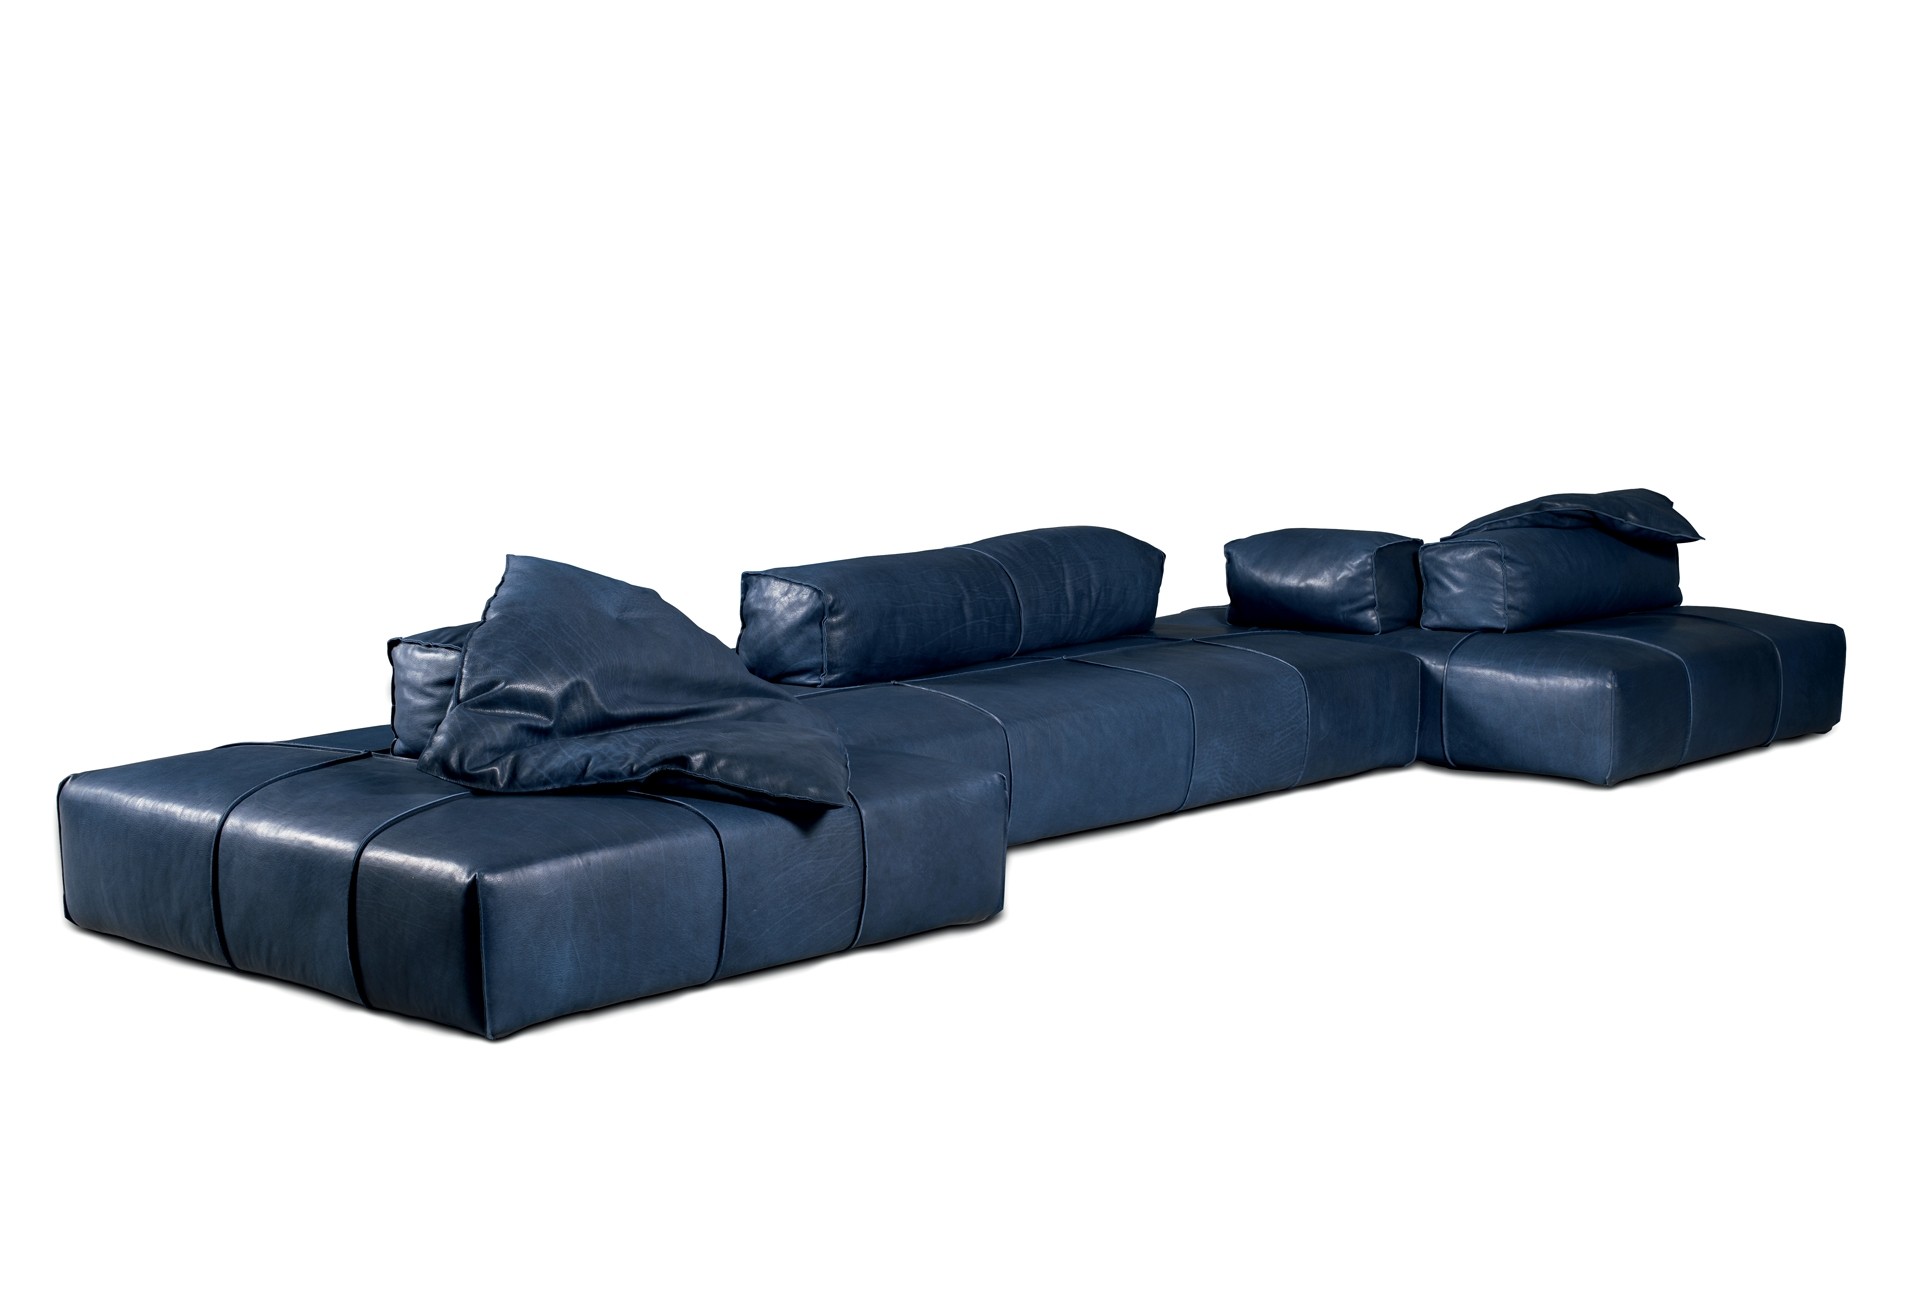 Baxter Bold Open Air Sofa Outdoor | Buy Online